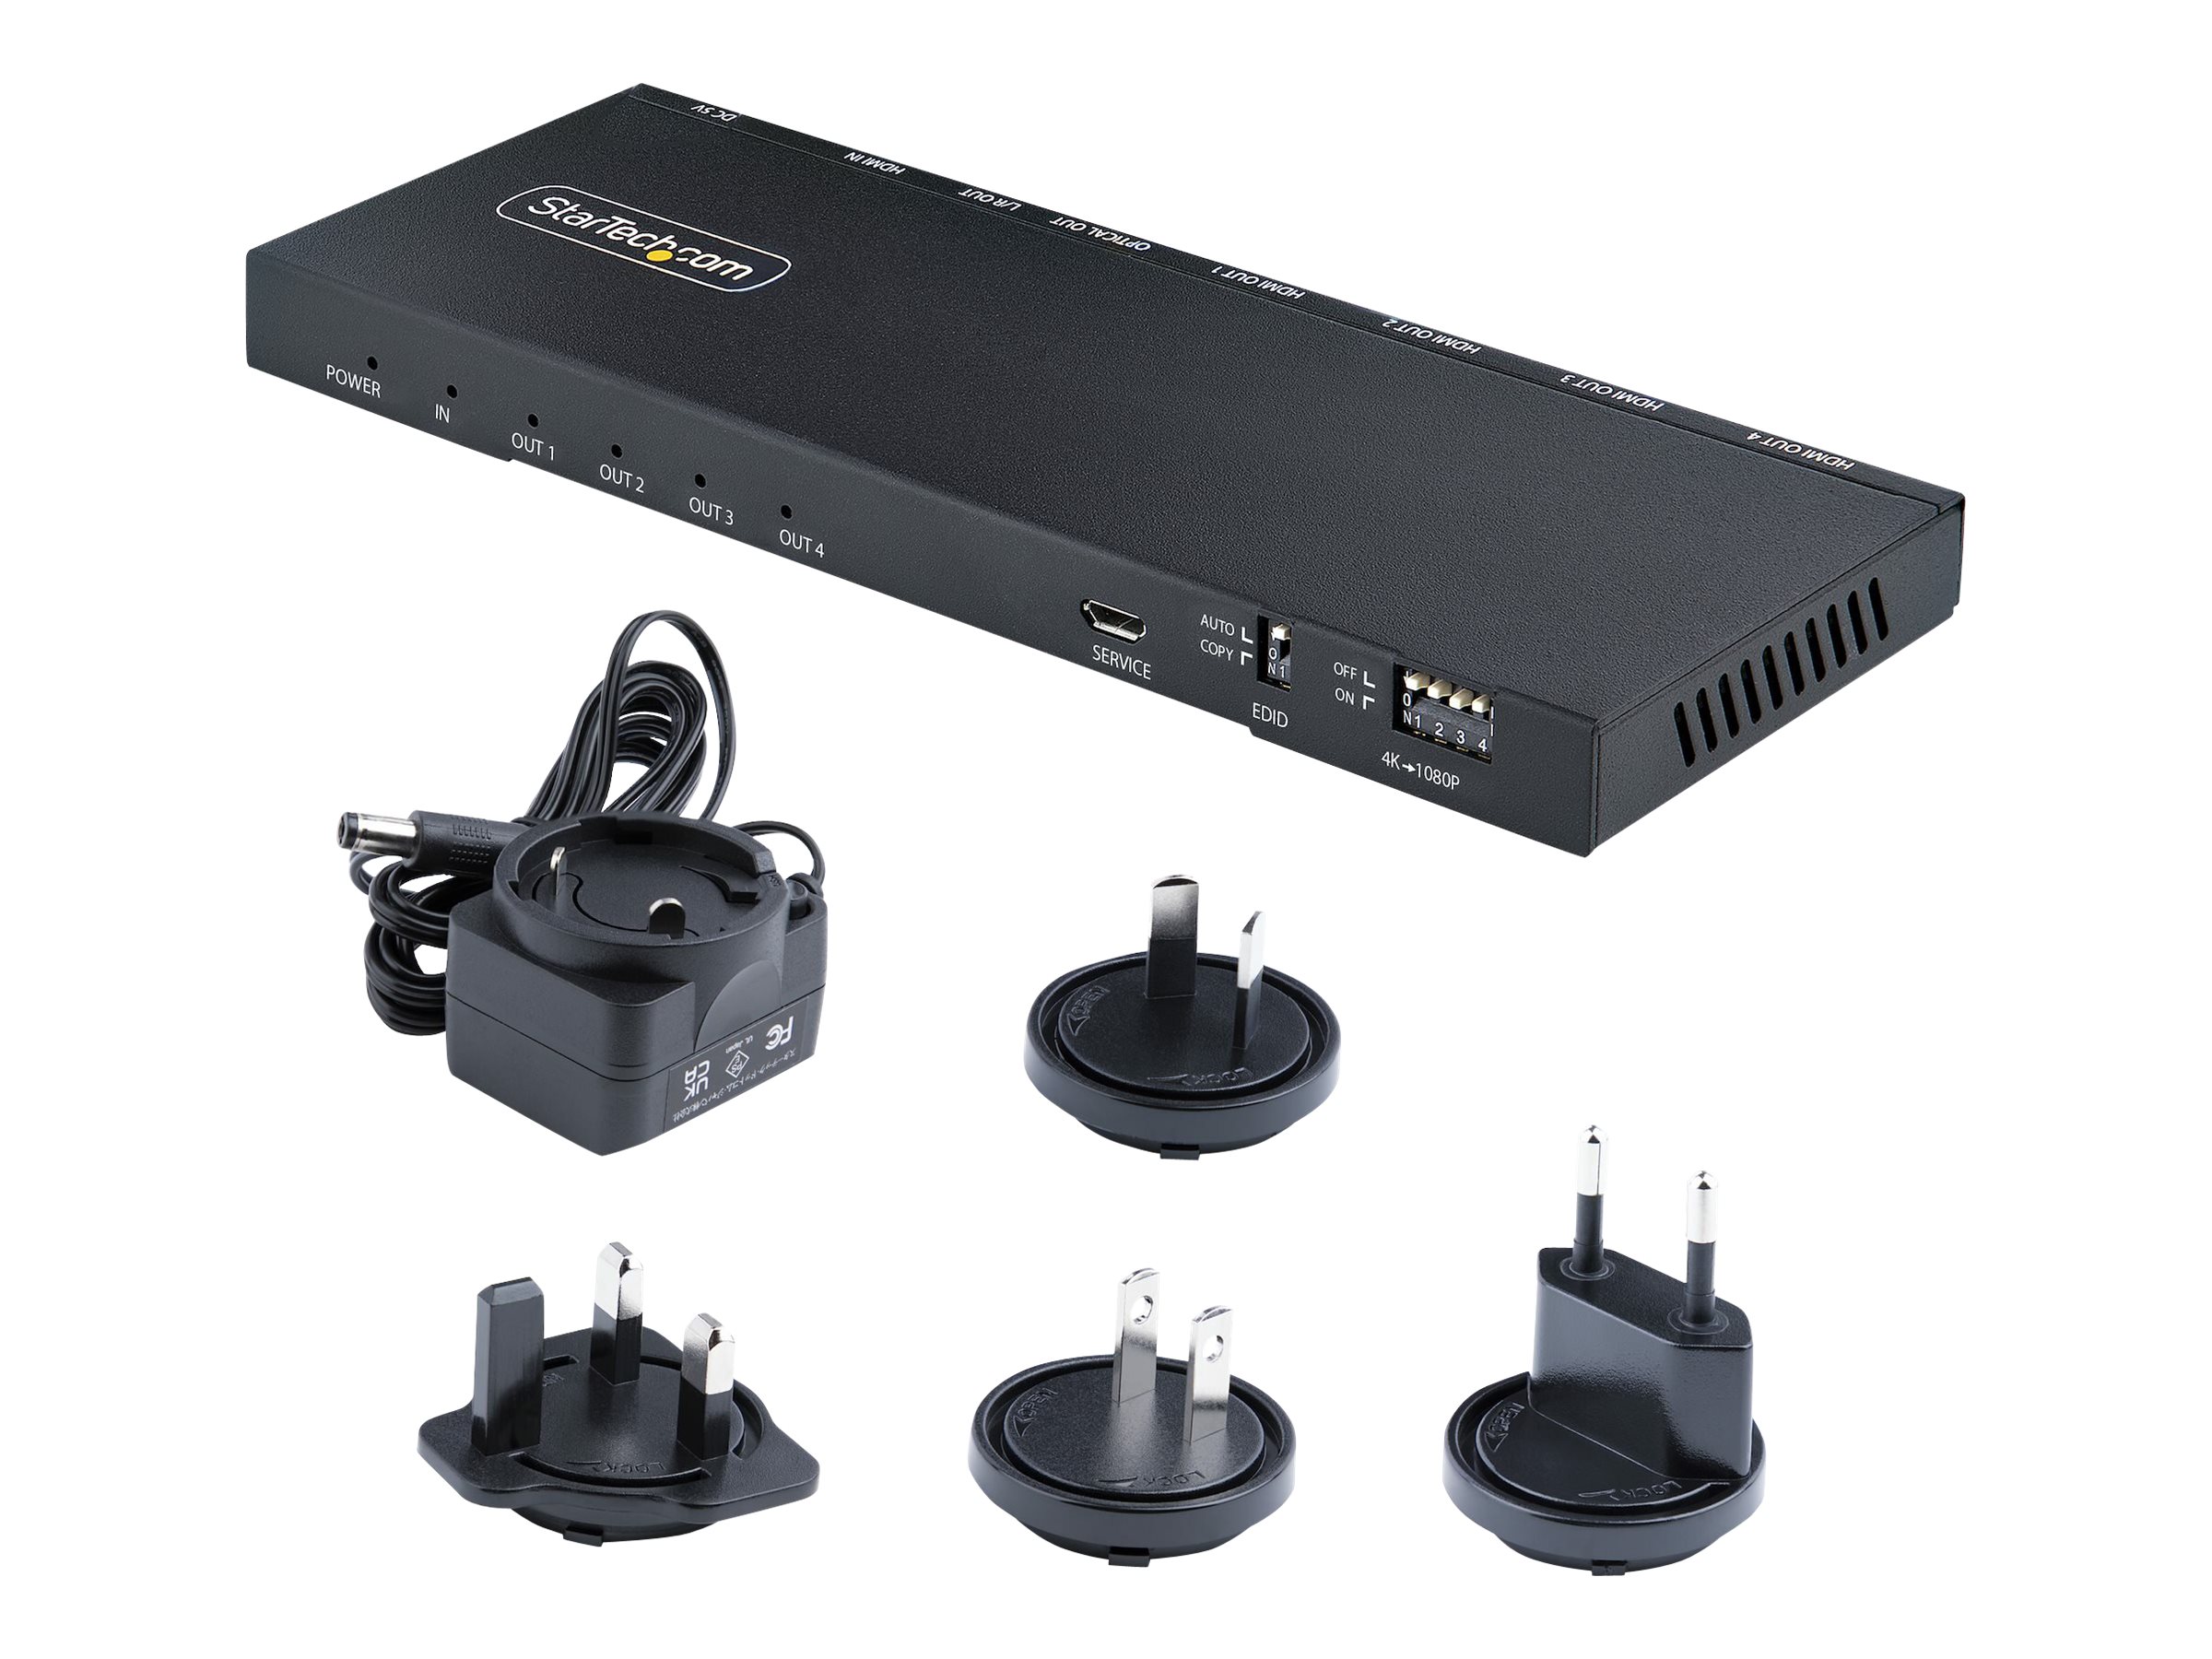 StarTech.com 4-Port HDMI Splitter, 4K 60Hz HDMI 2.0 Video, 1 In 4 Out HDMI Splitter, 4K HDMI Splitter w/Built-in Scaler, 3.5mm/Optical Audio Port, Durable Metal Housing, HDR/HDCP - 1x4 HDMI Display/Output Splitter (HDMI-SPLITTER-44K60S)